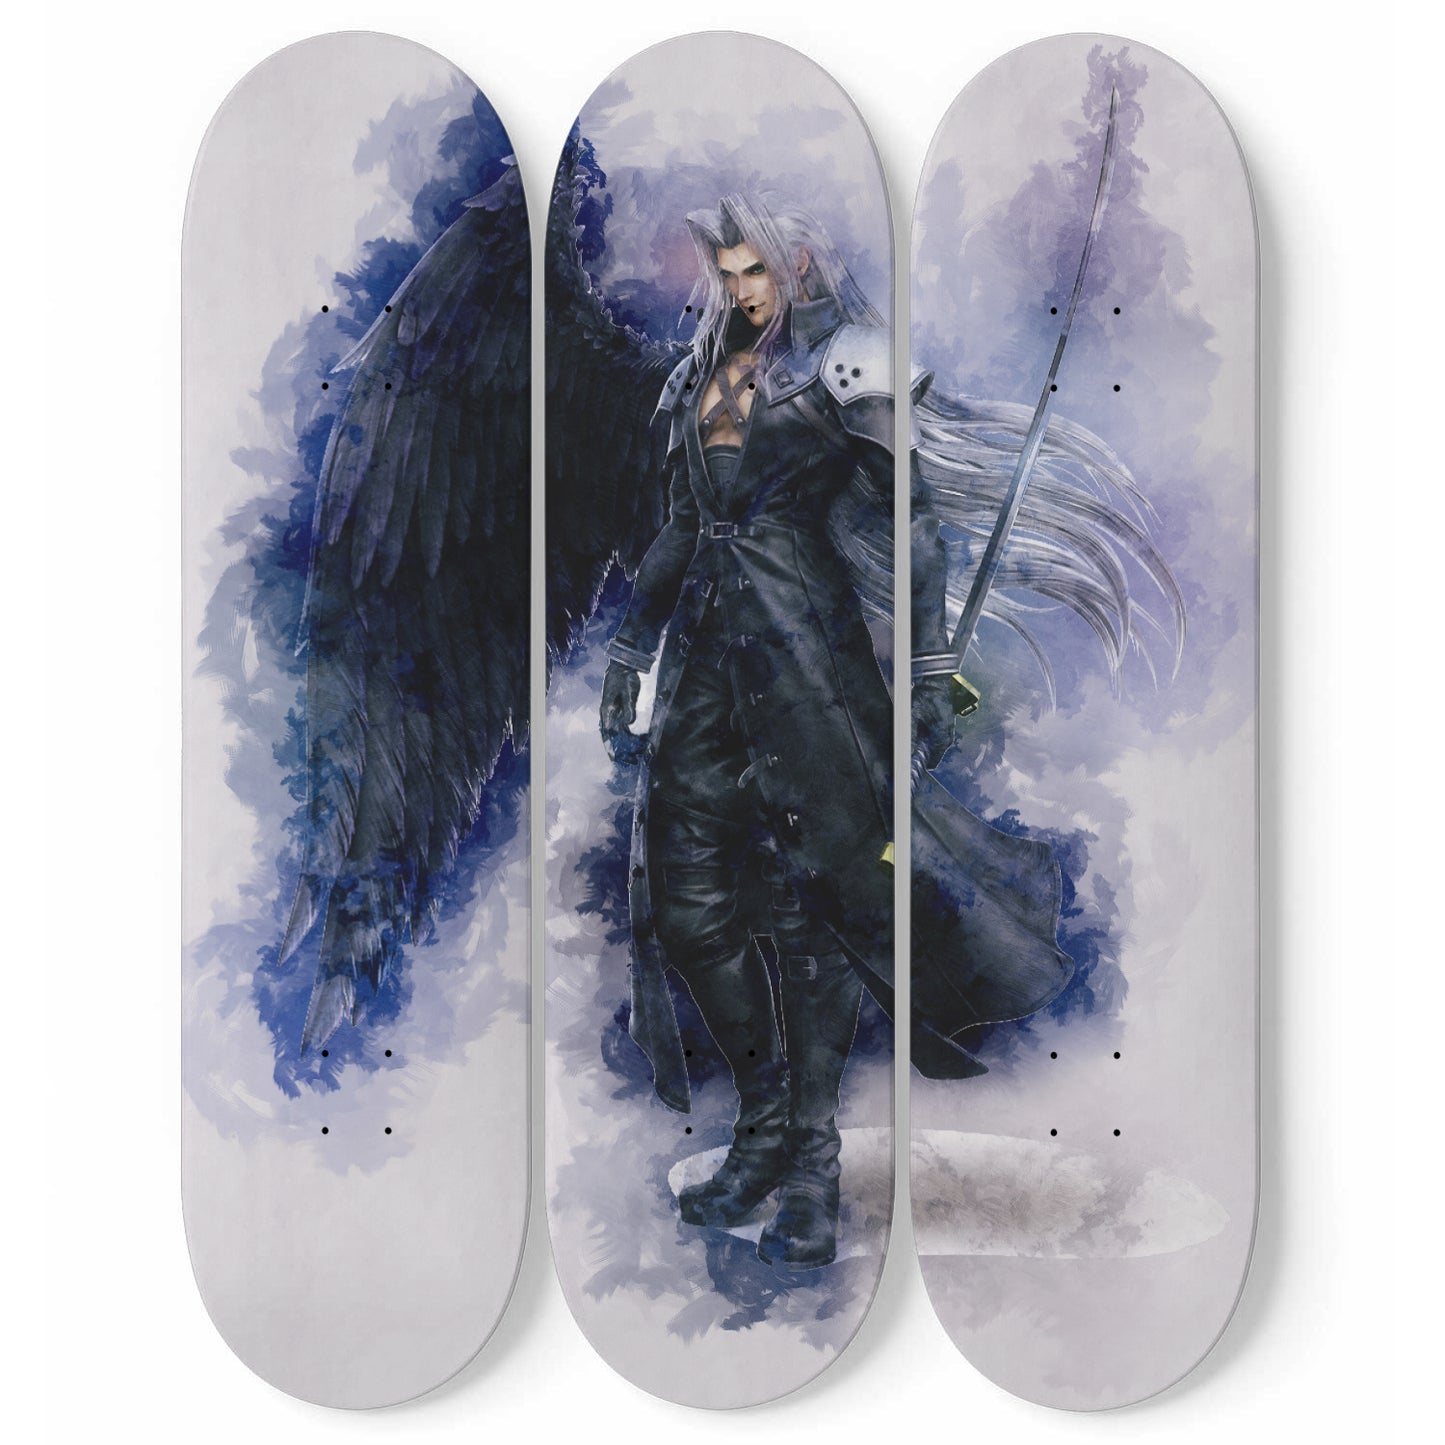 Final Fantasy 7 - Sephiroth Painting, 3-piece Skateboard Wall Art